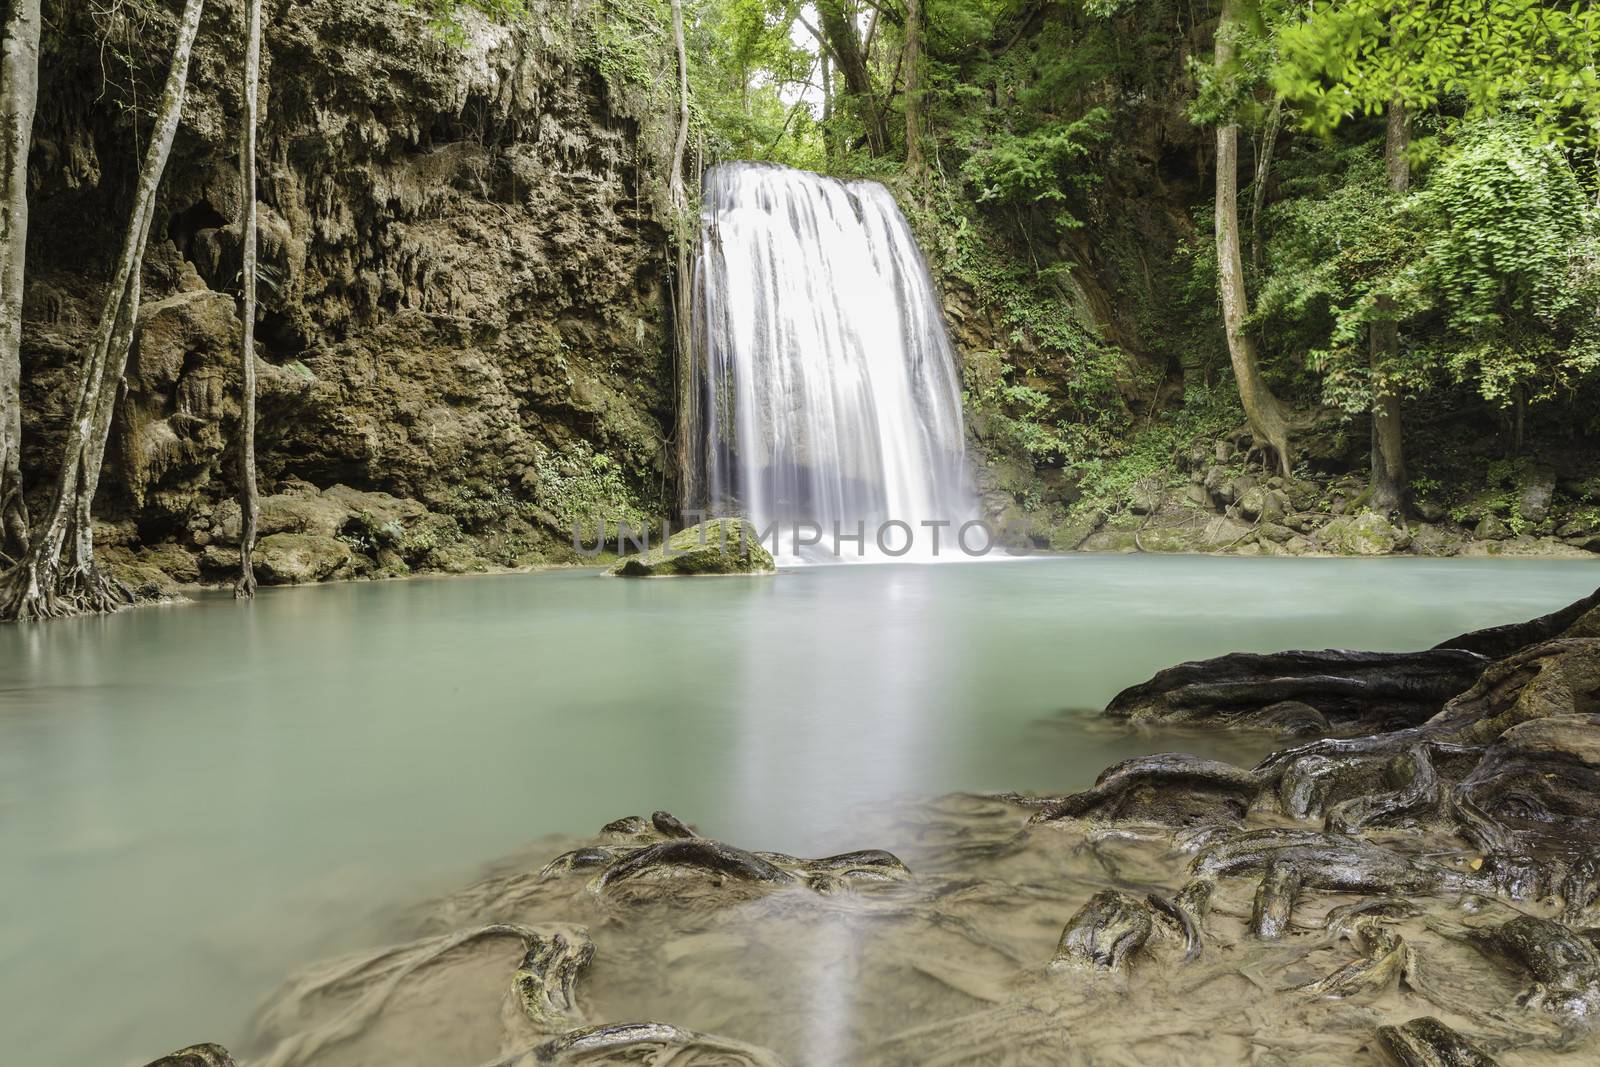 Waterfall in tropical forest at Erawan national park Kanchanabur by panyajampatong